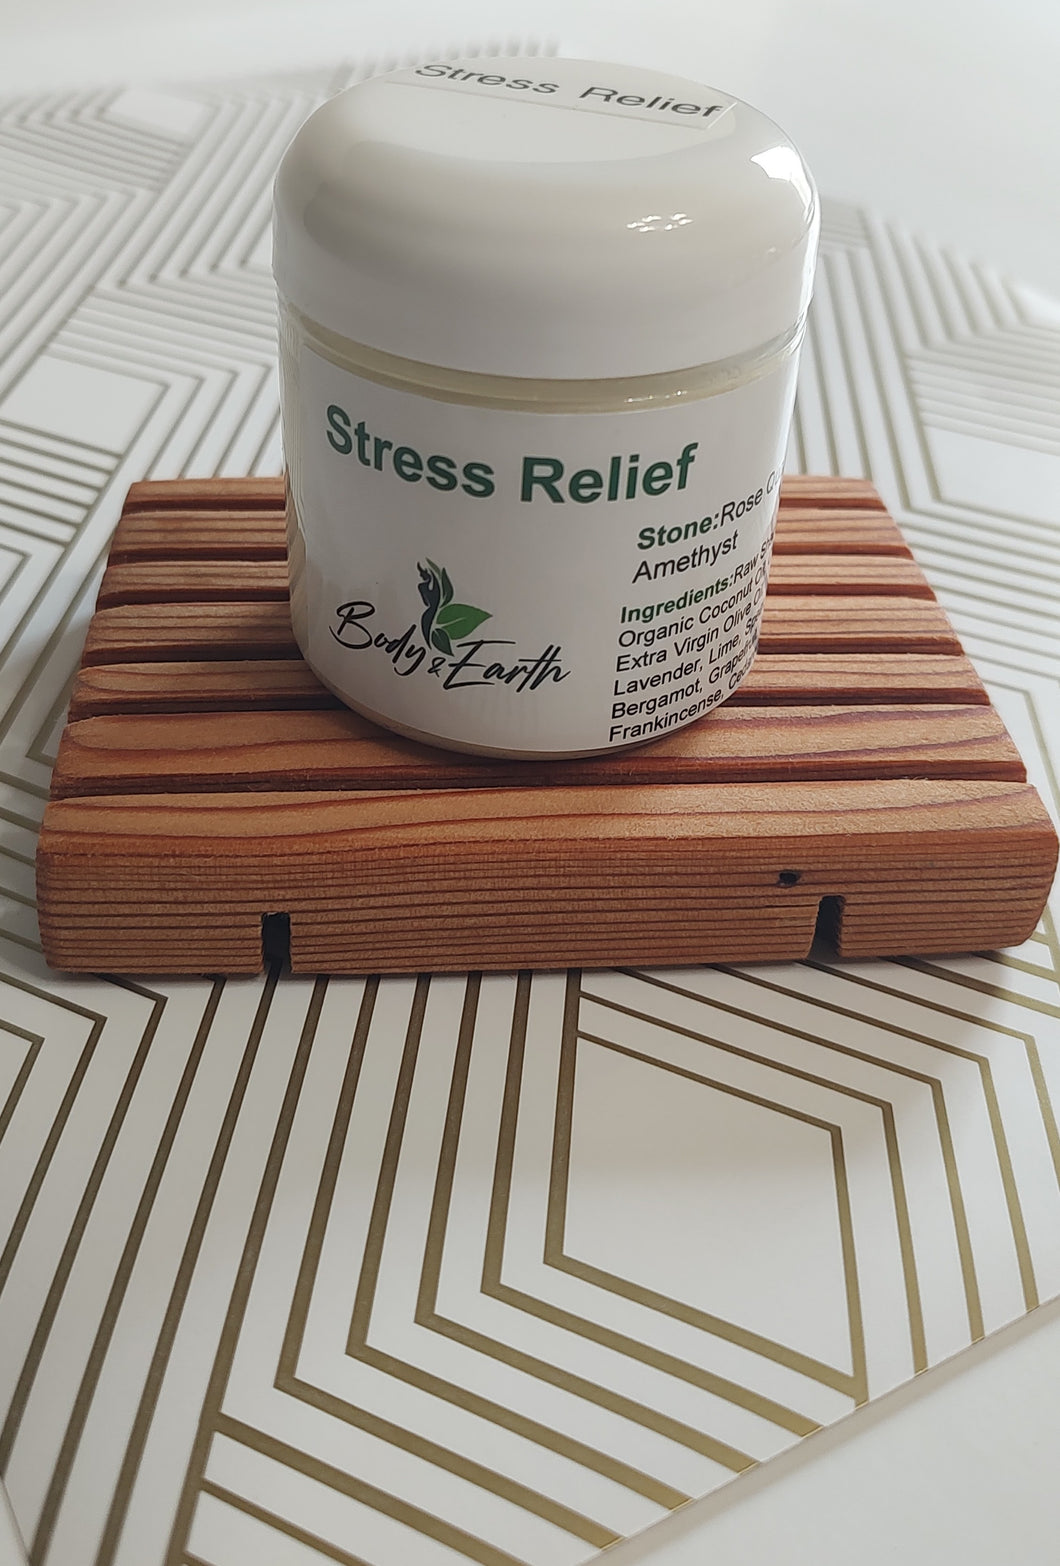 Stress Relief Body Butter